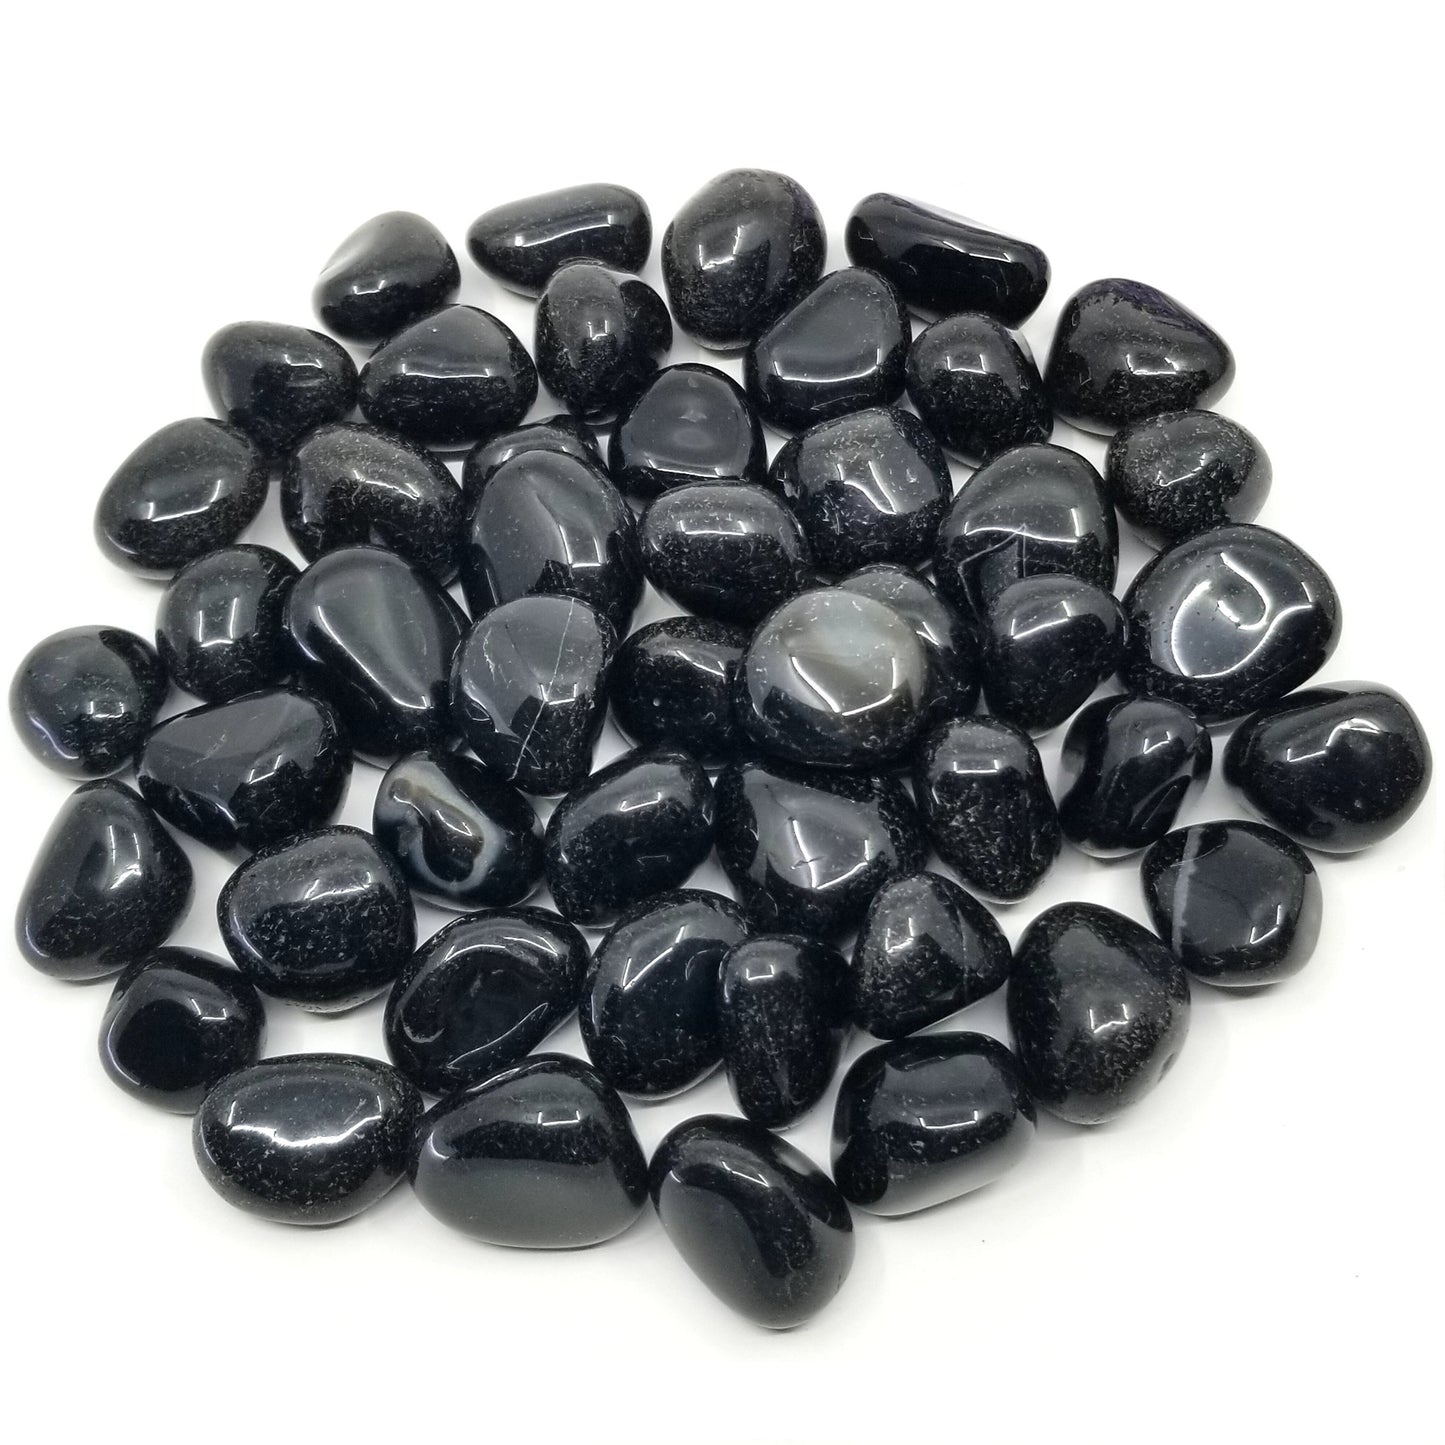 Black Onyx Tumbled Stones - Bulk Wholesale choose: 1lb, 3lbs or 5lbs